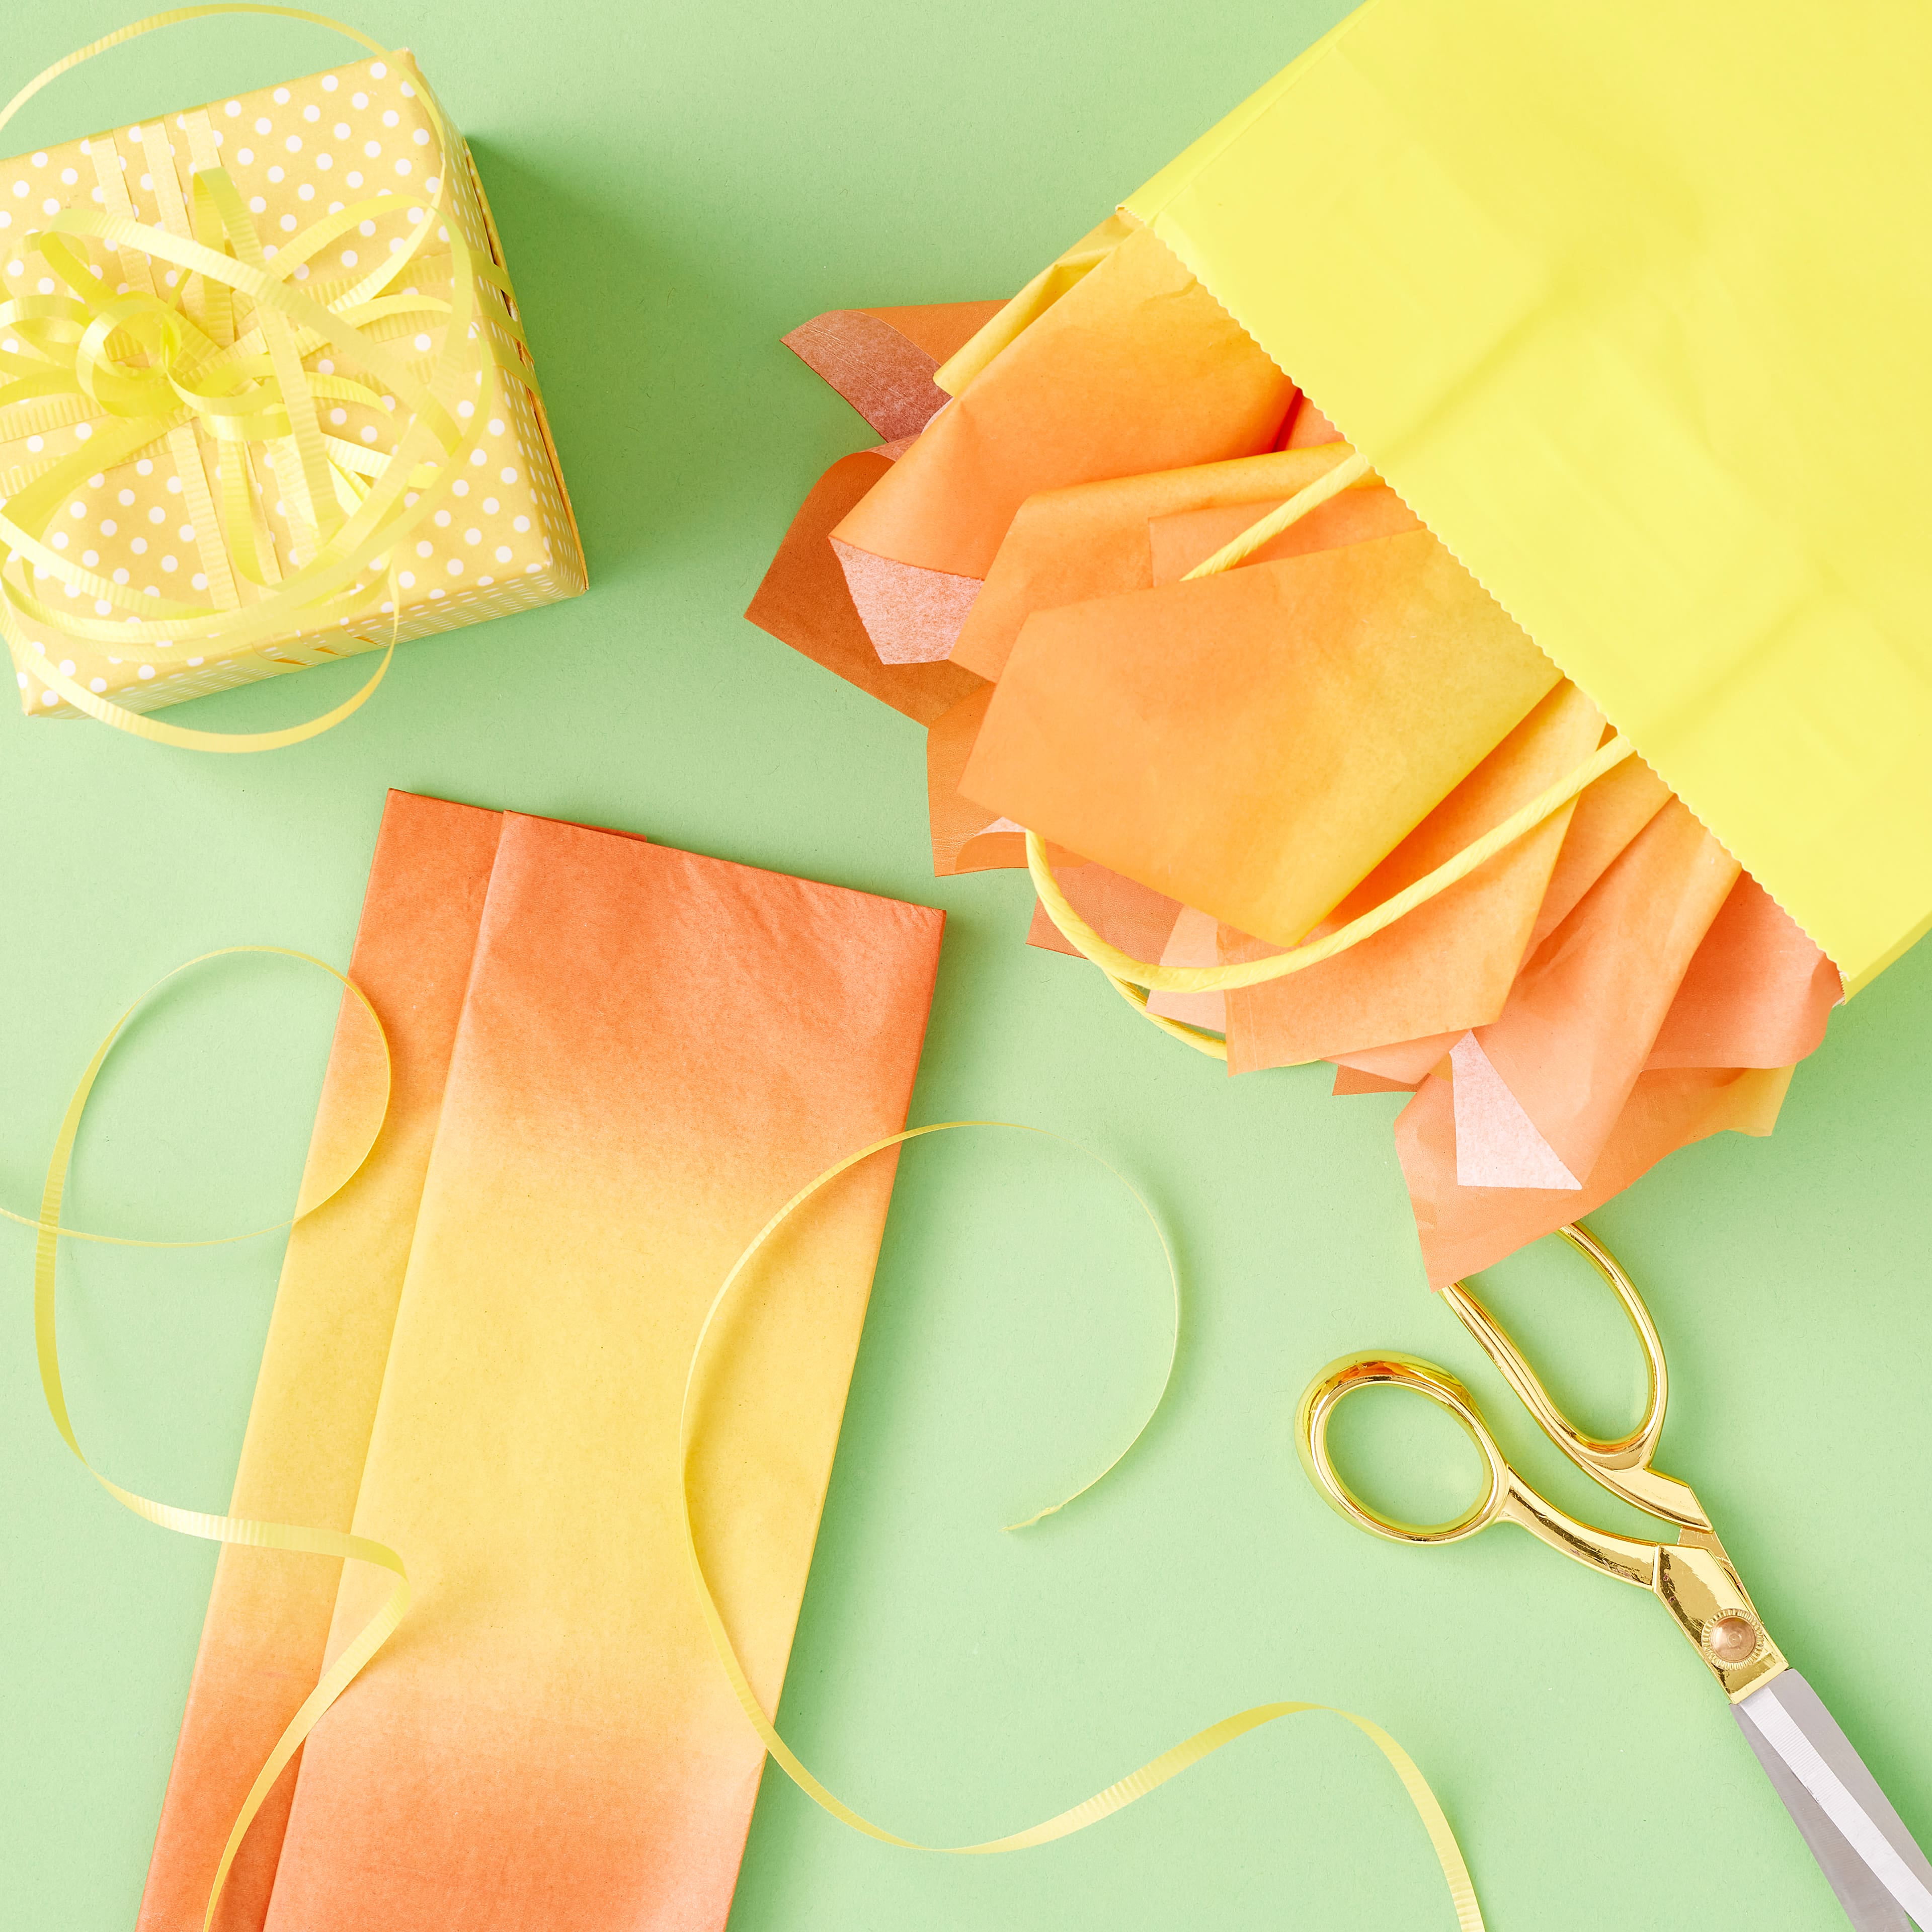 100 Sheets Black Orange Yellow Tissue Paper for Gift Bags,Gift Orange  Series